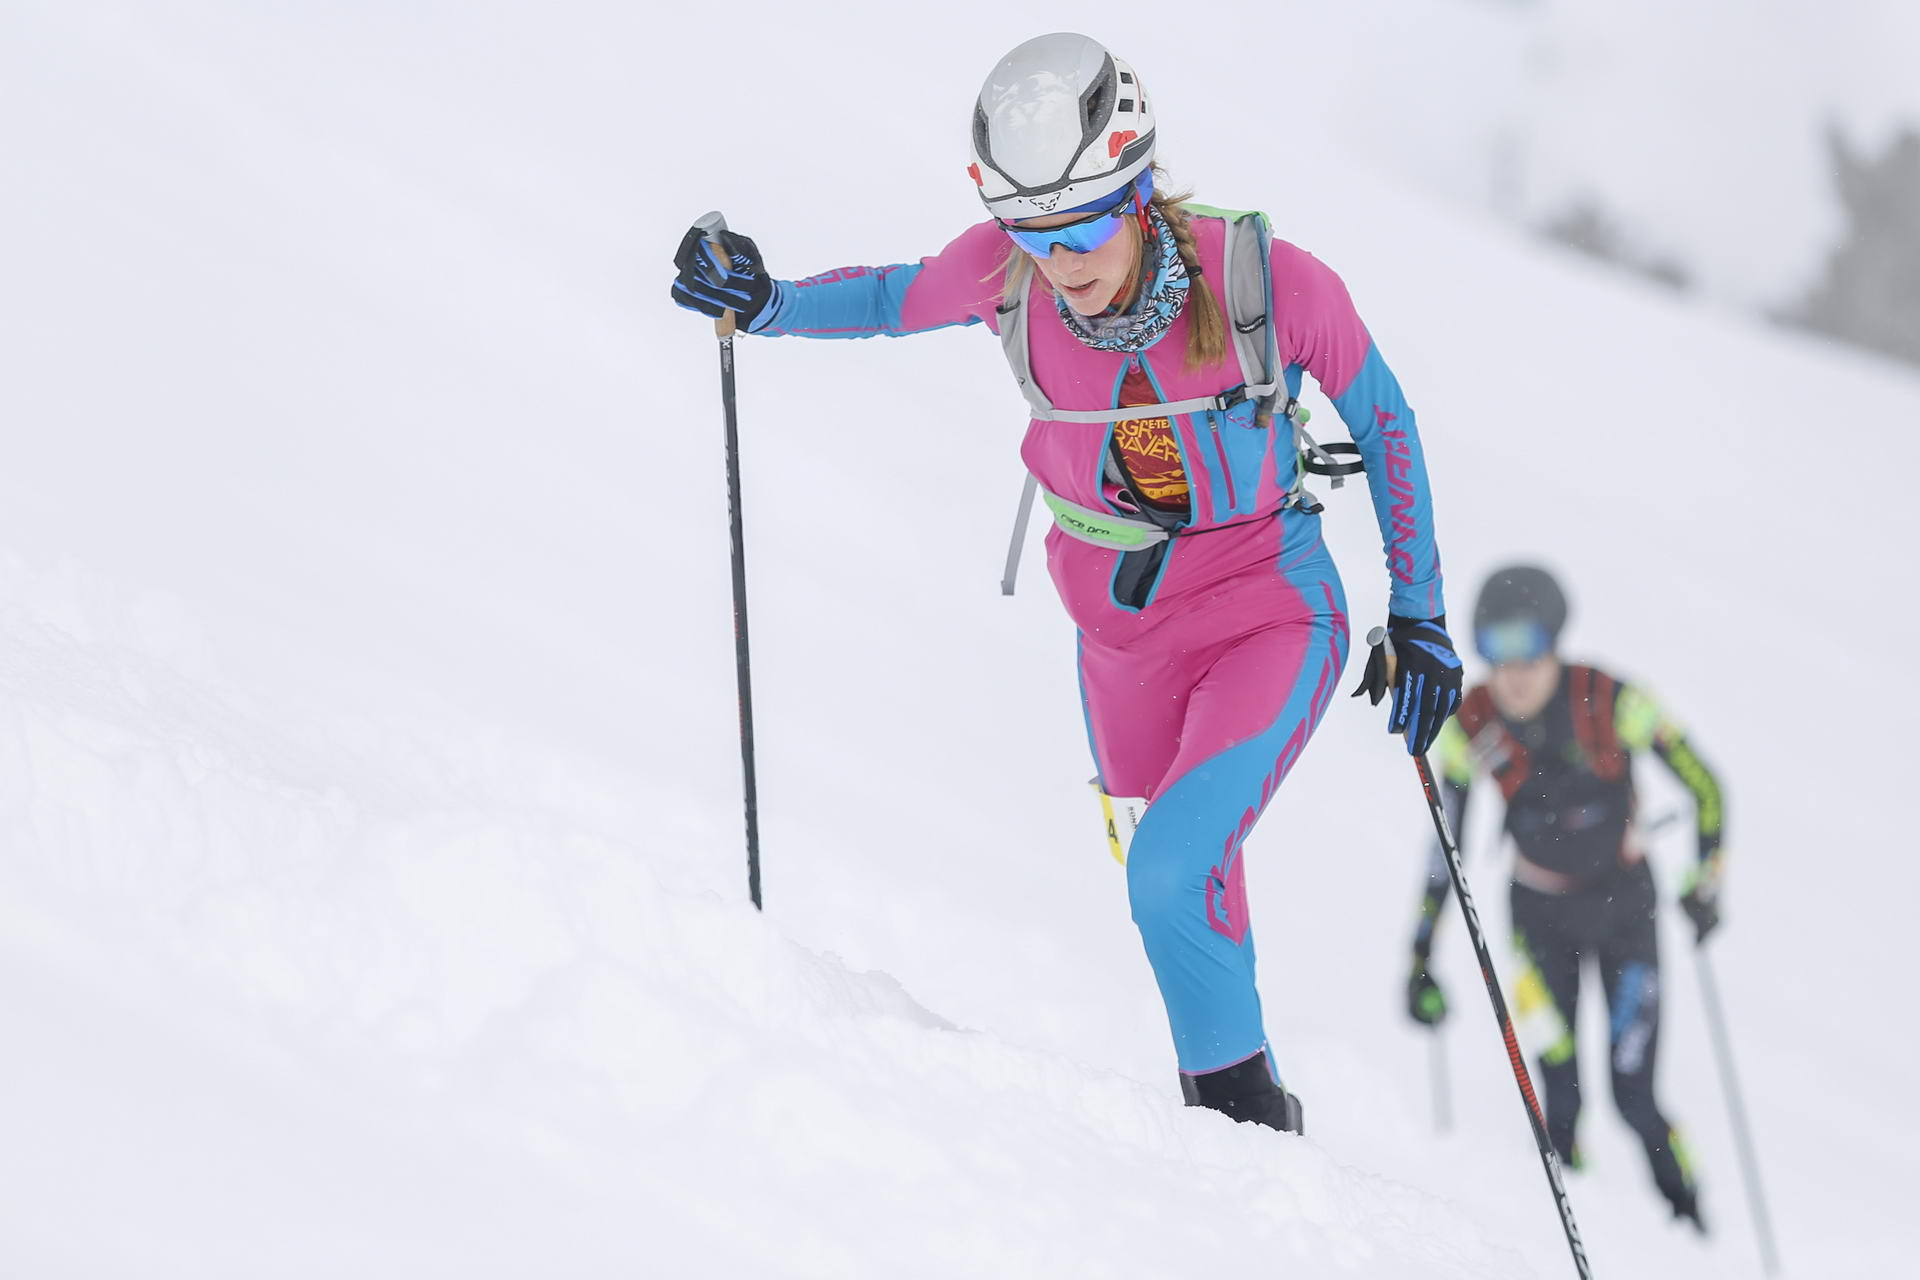 Erztrophy 2018 Individual Race on January 04 2018 in Muehlbach, Oesterreich, Foto: David Geieregger